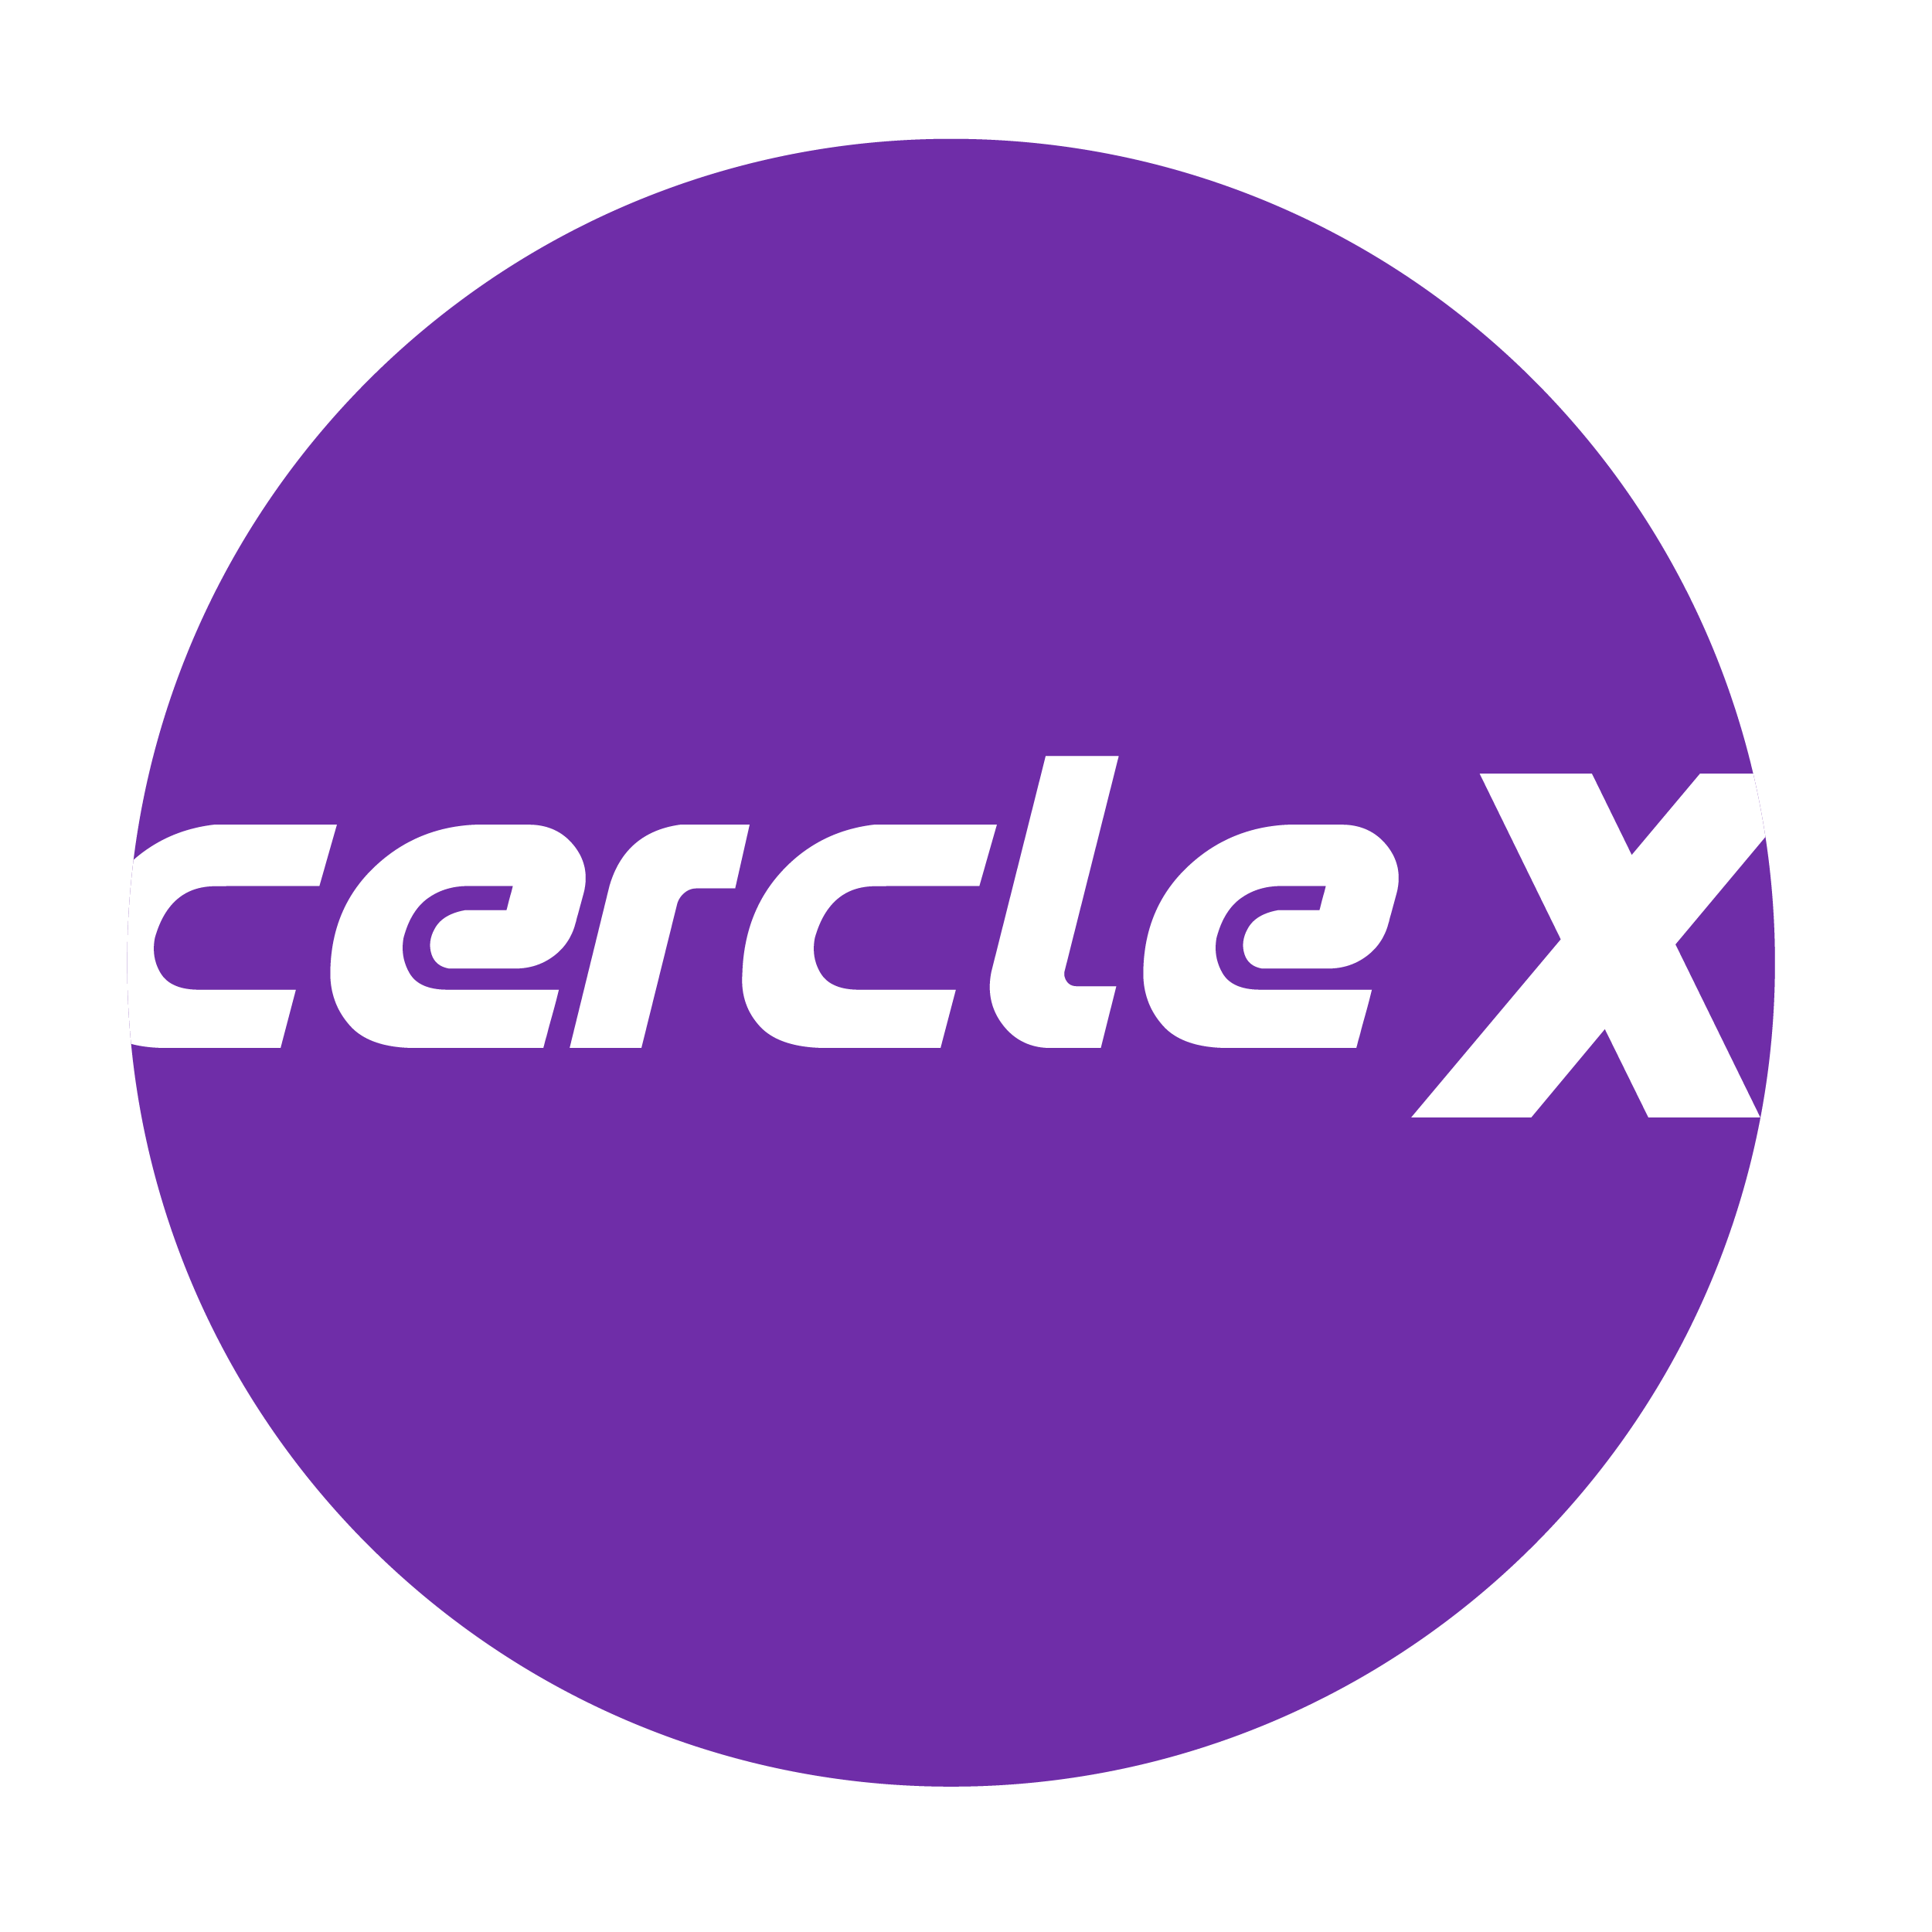 Cerclex